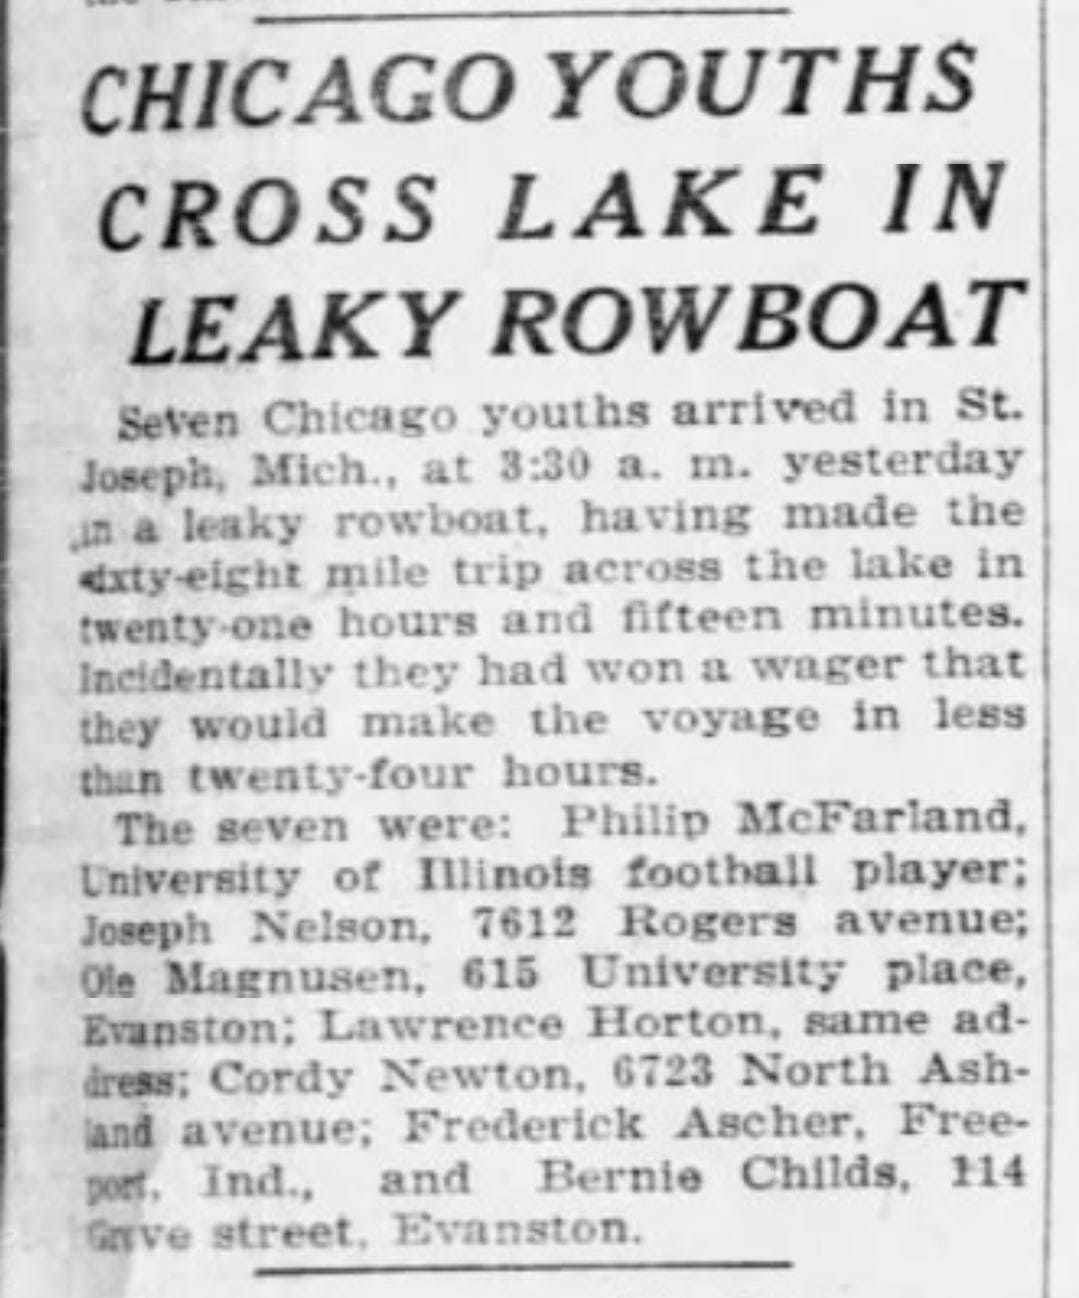 Cross Lake Michigan in leaky boat, news clip